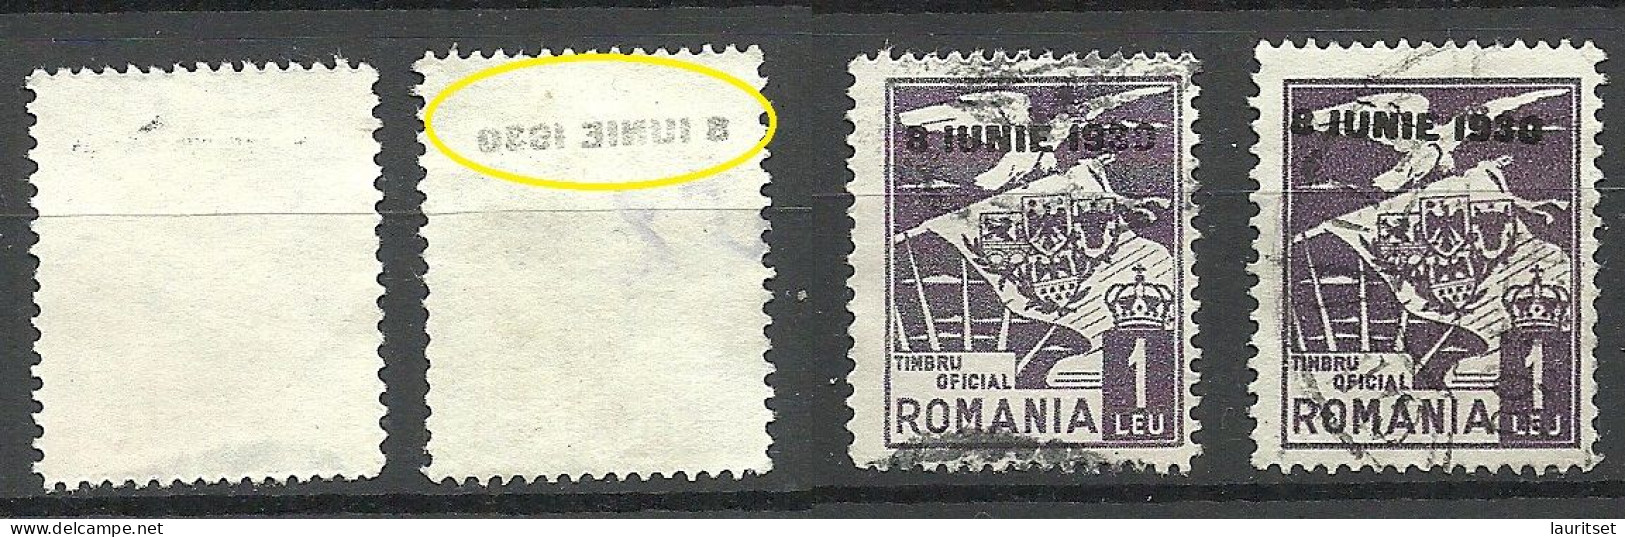 ROMANIA Rumänien 1930 Dienstmarke Normal + Variety Set Off Of OPT Abklatsch D. Aufdruckes - Oficiales